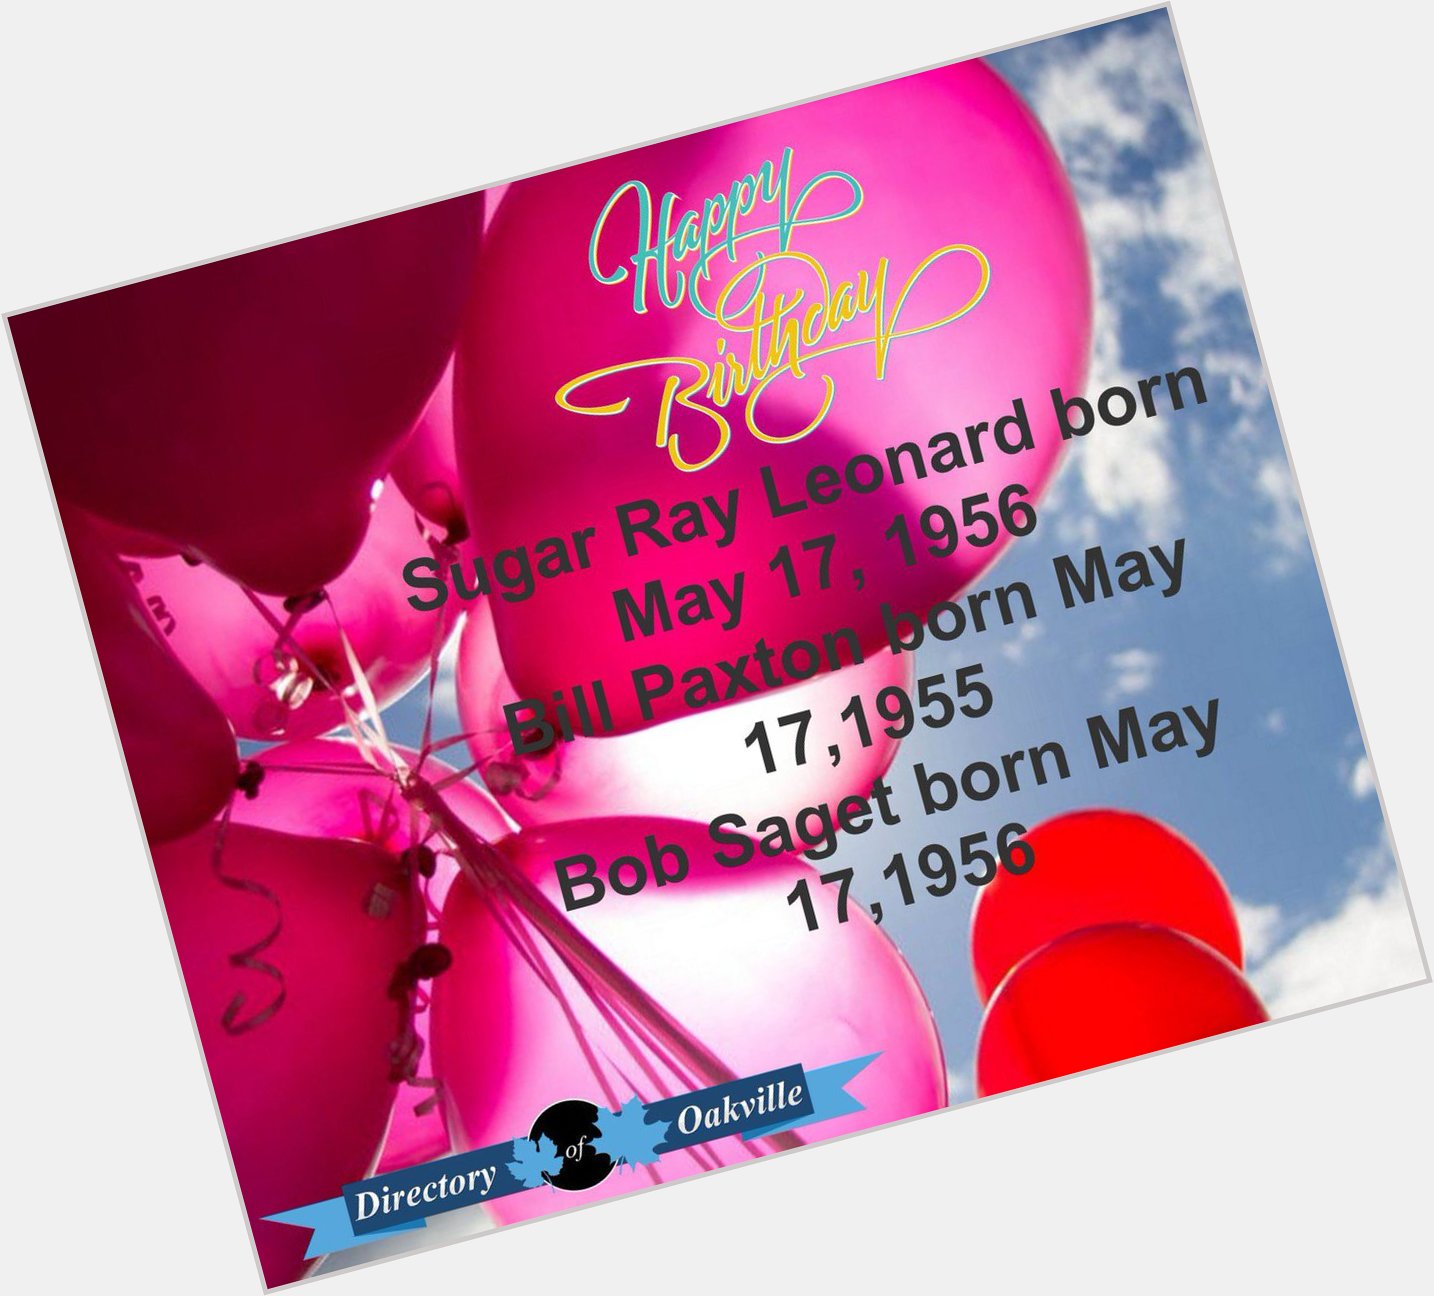 HAPPY BIRTHDAY!
Sugar Ray Leonard born May 17, 1956
Bill Paxton born May 17,1955
Bob Saget born May 17,1956 